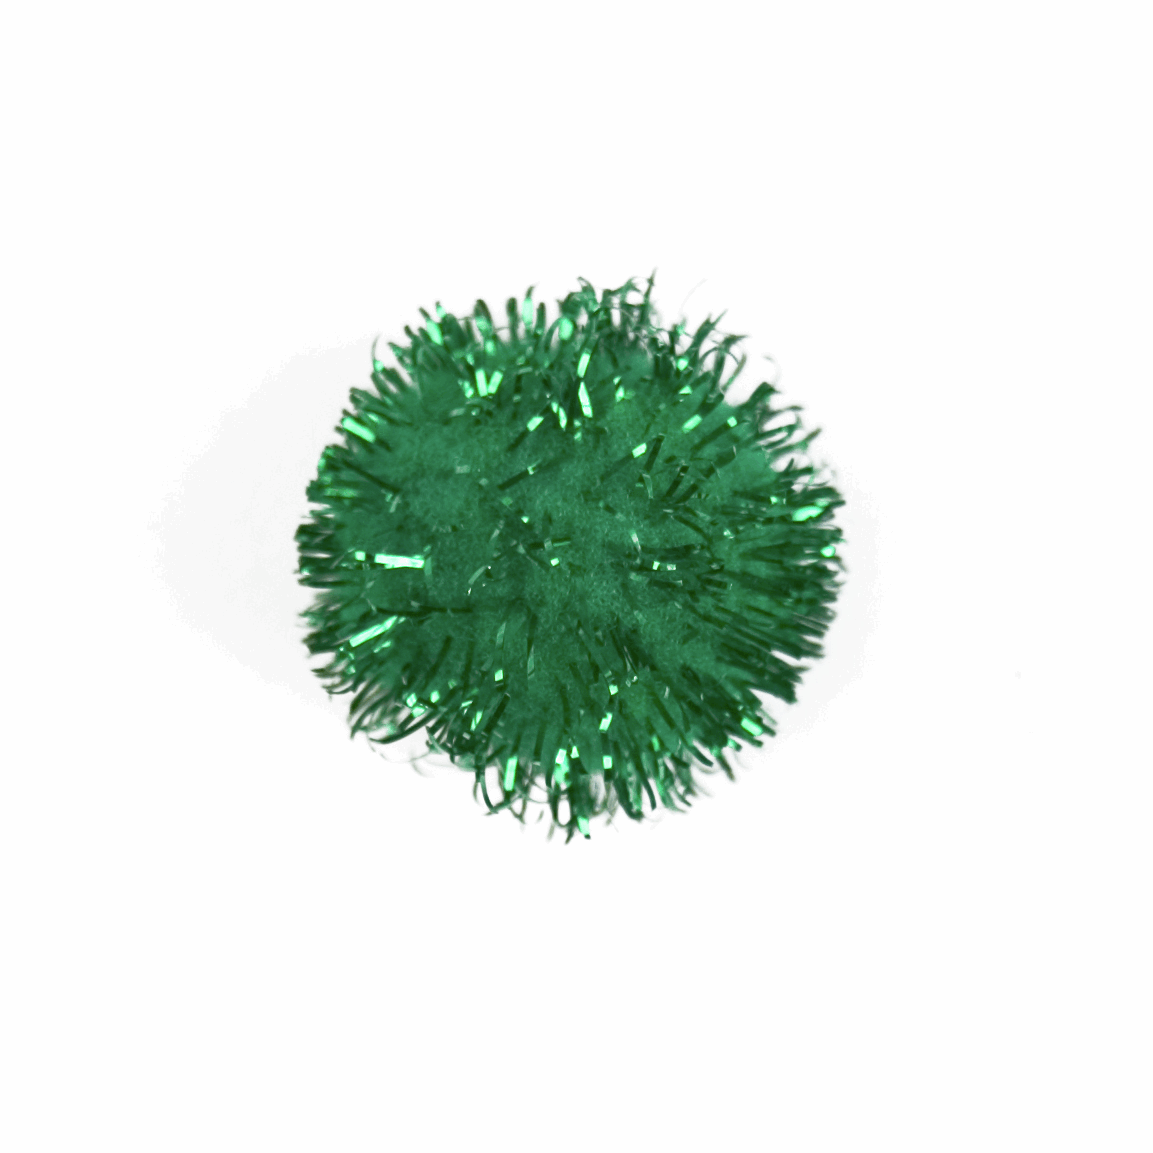 Trimits Green Glitter Pom Poms - 2.5cm / 1inch (Pack of 8)